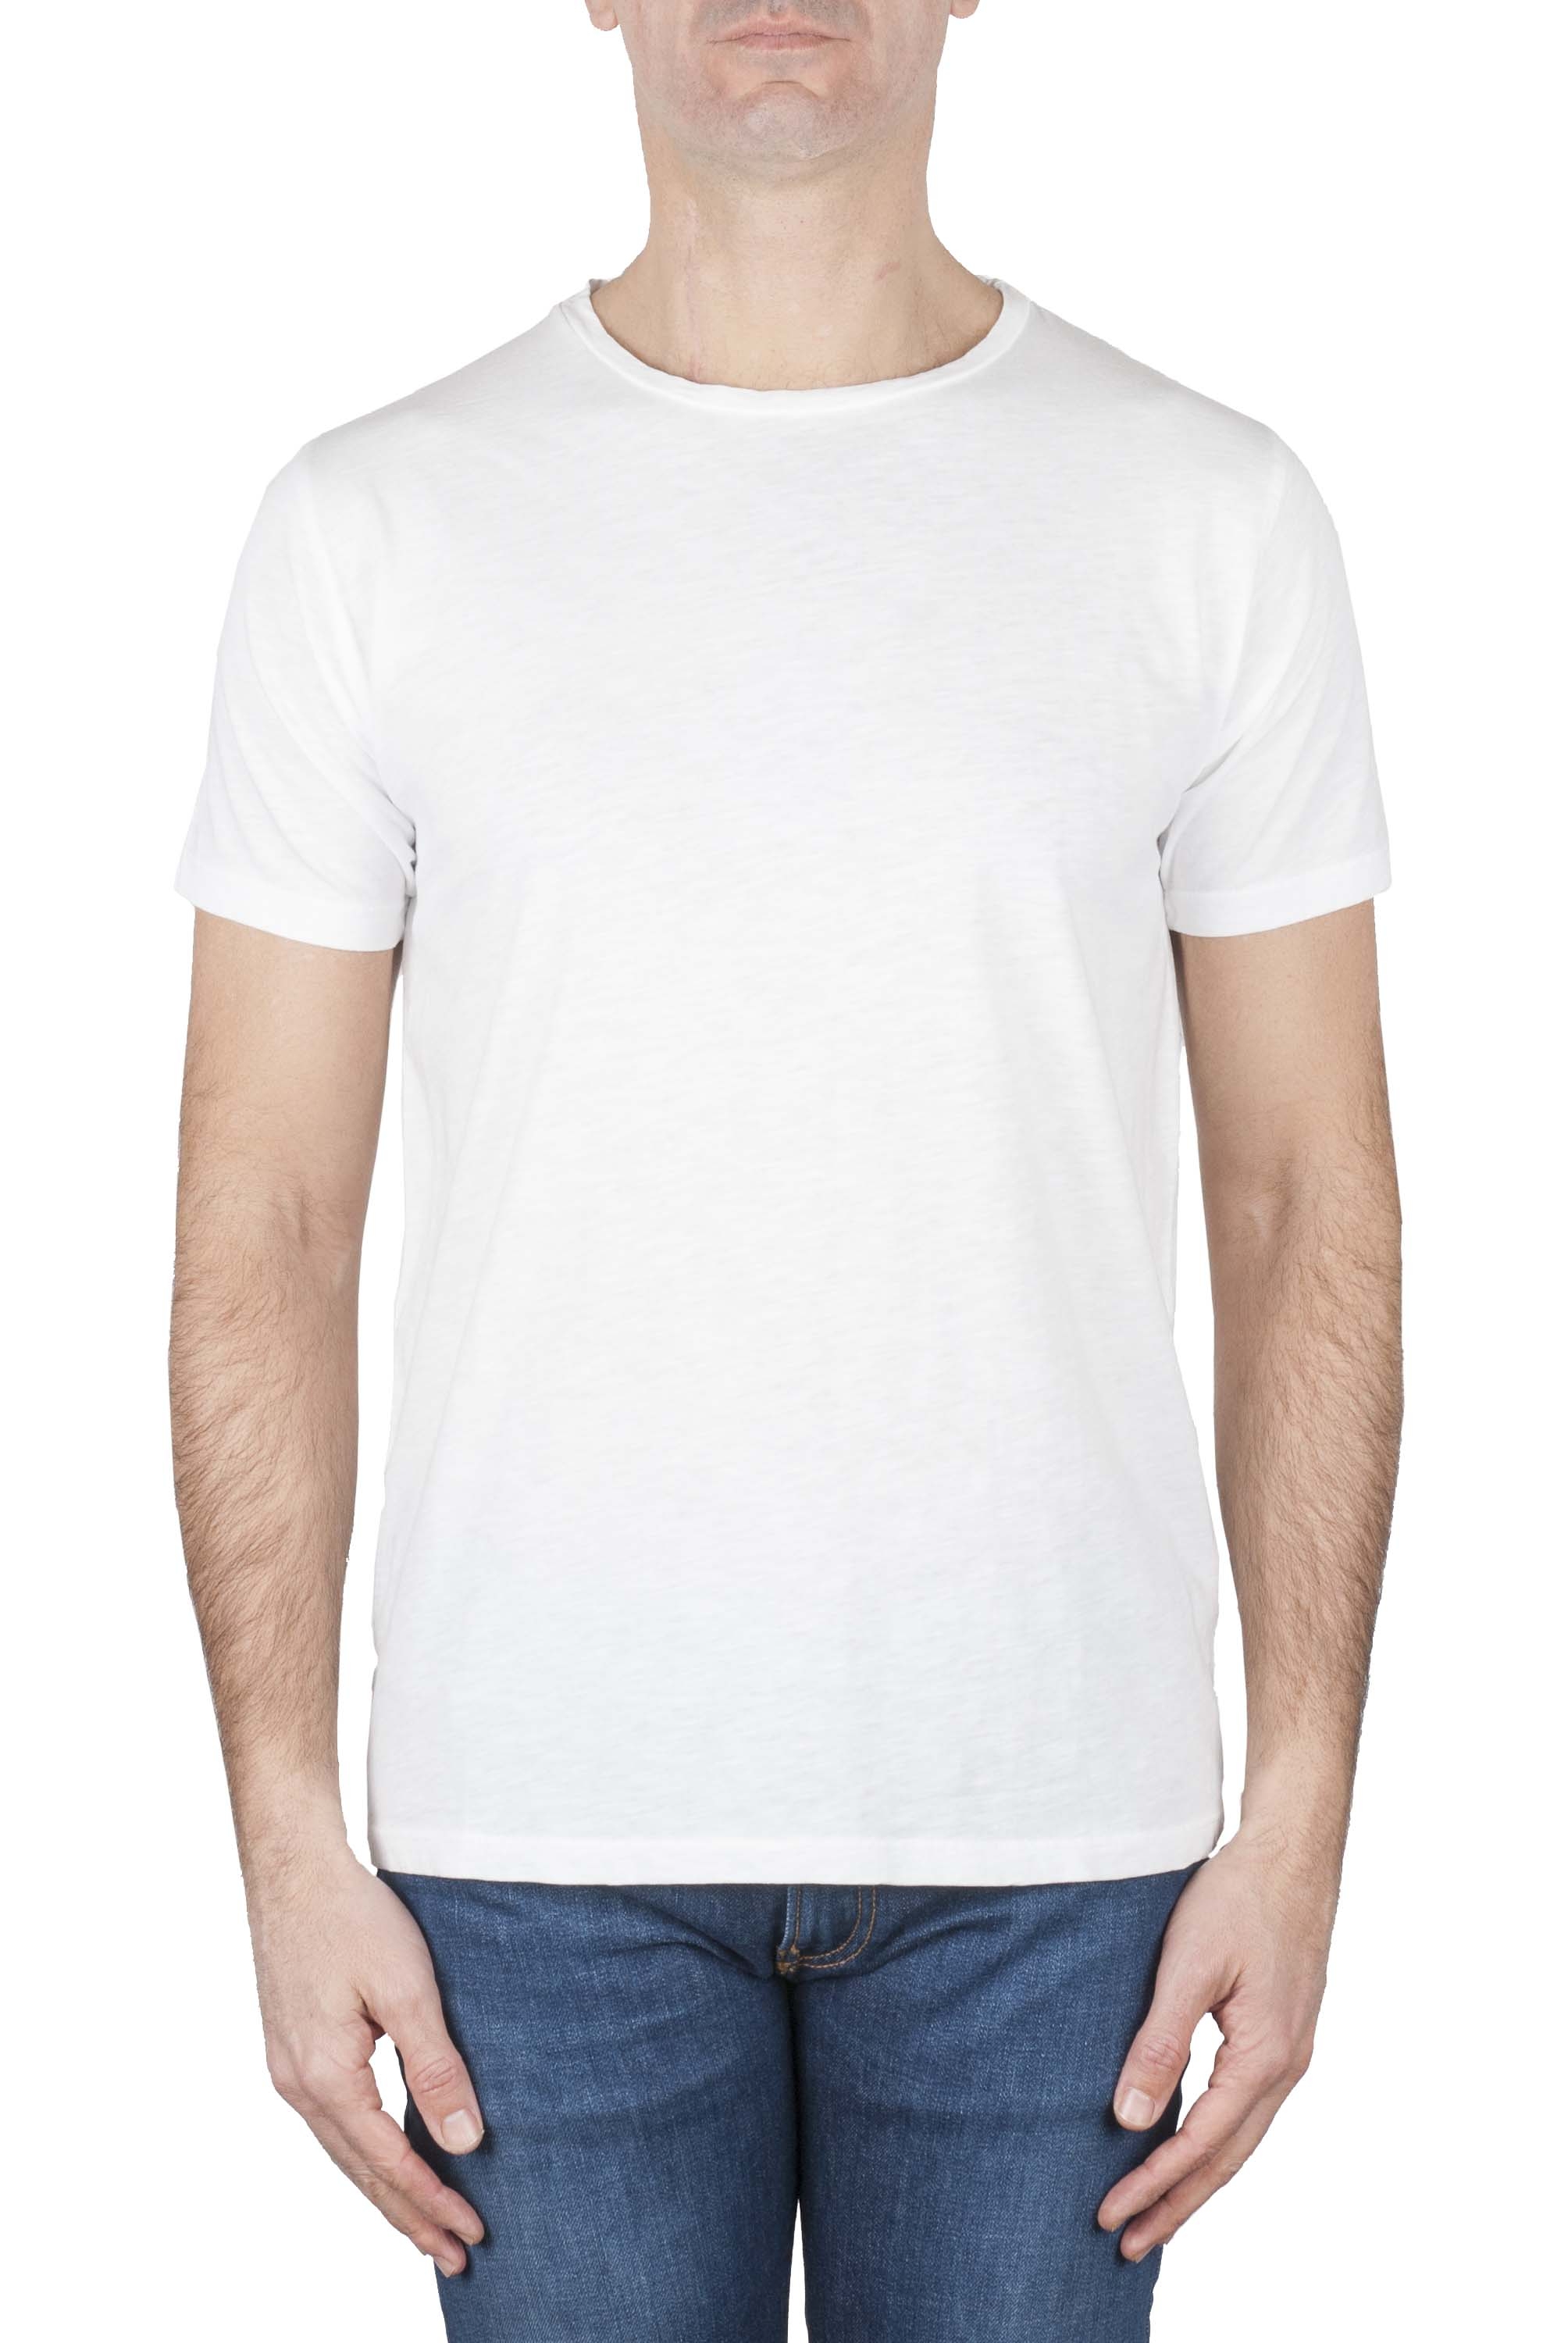 SBU 01151 Scoop neck cotton t-shirt 01